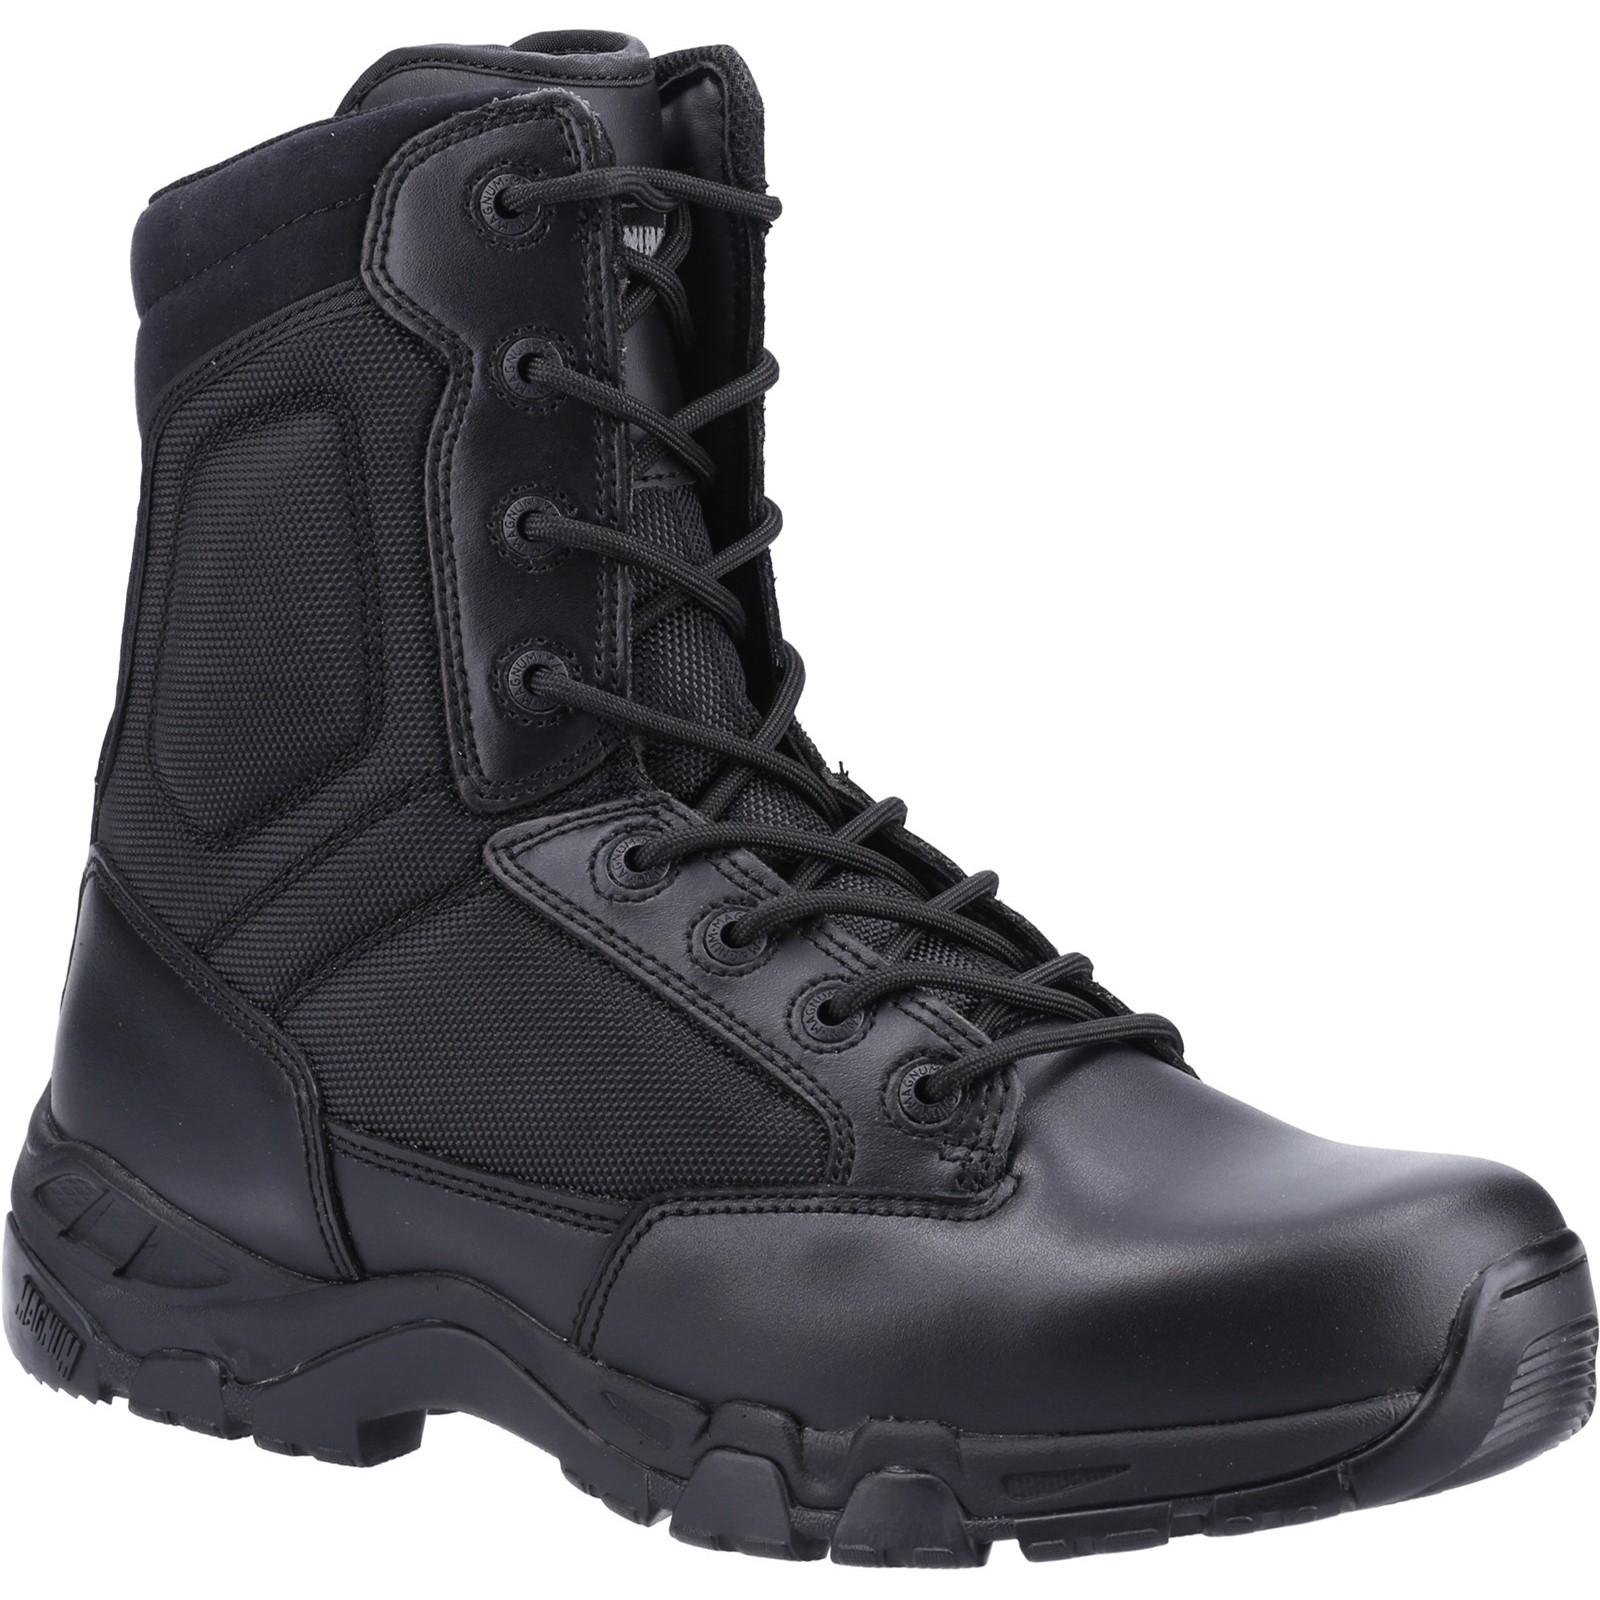 Viper Pro 8.0 Plus Uniform Safety Boot